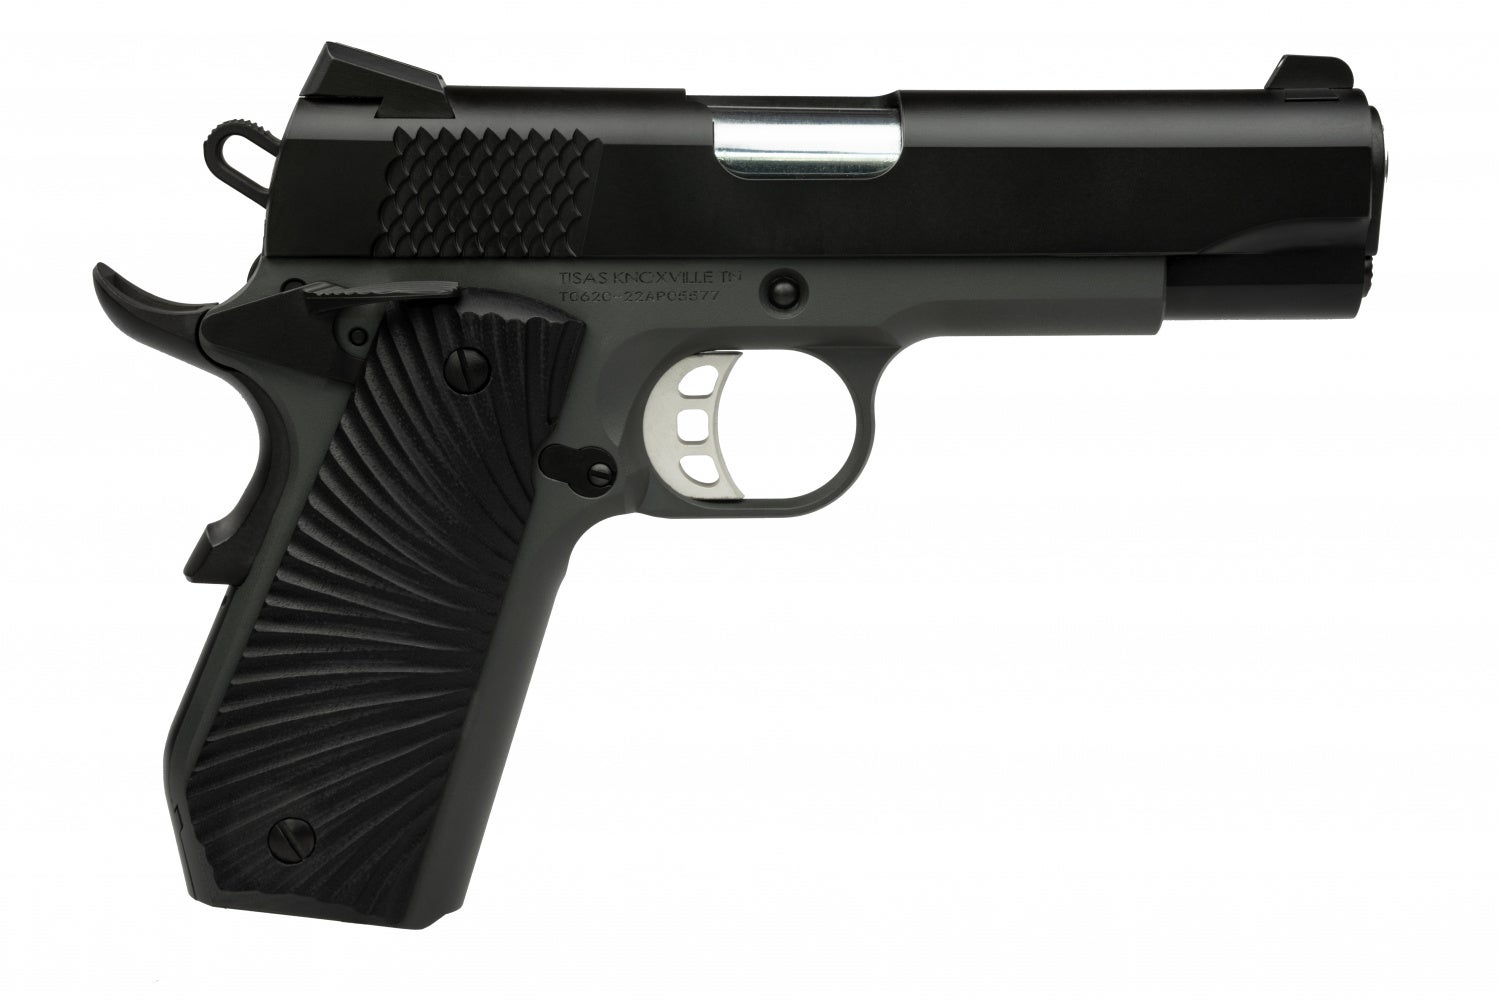 Tisas Announces the New 1911 Stingray Carry Pistol